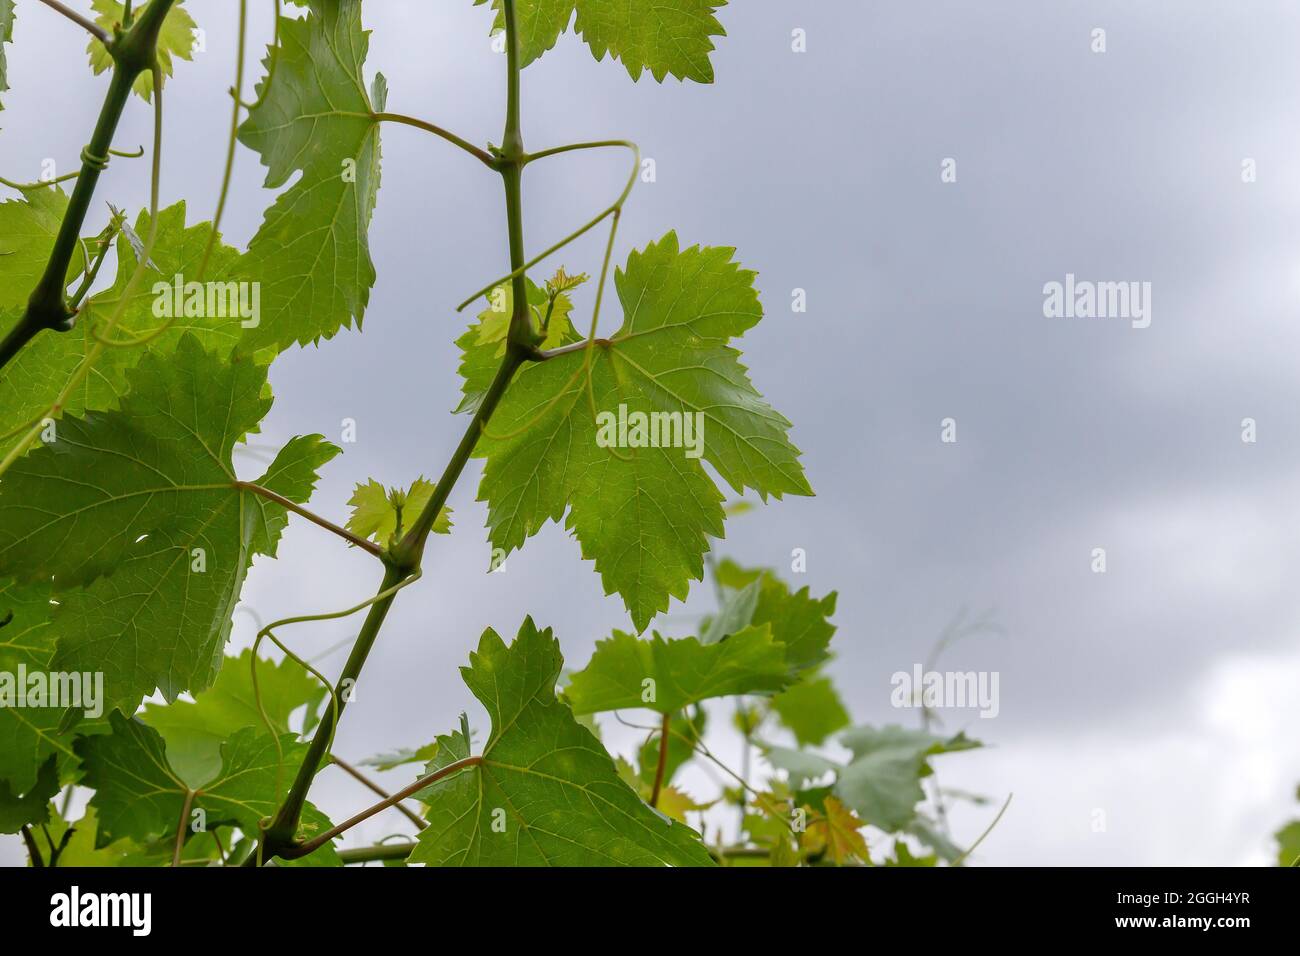 Vitis vinifera grape vine cultivated in making farm vineyard green foliage Stock Photo